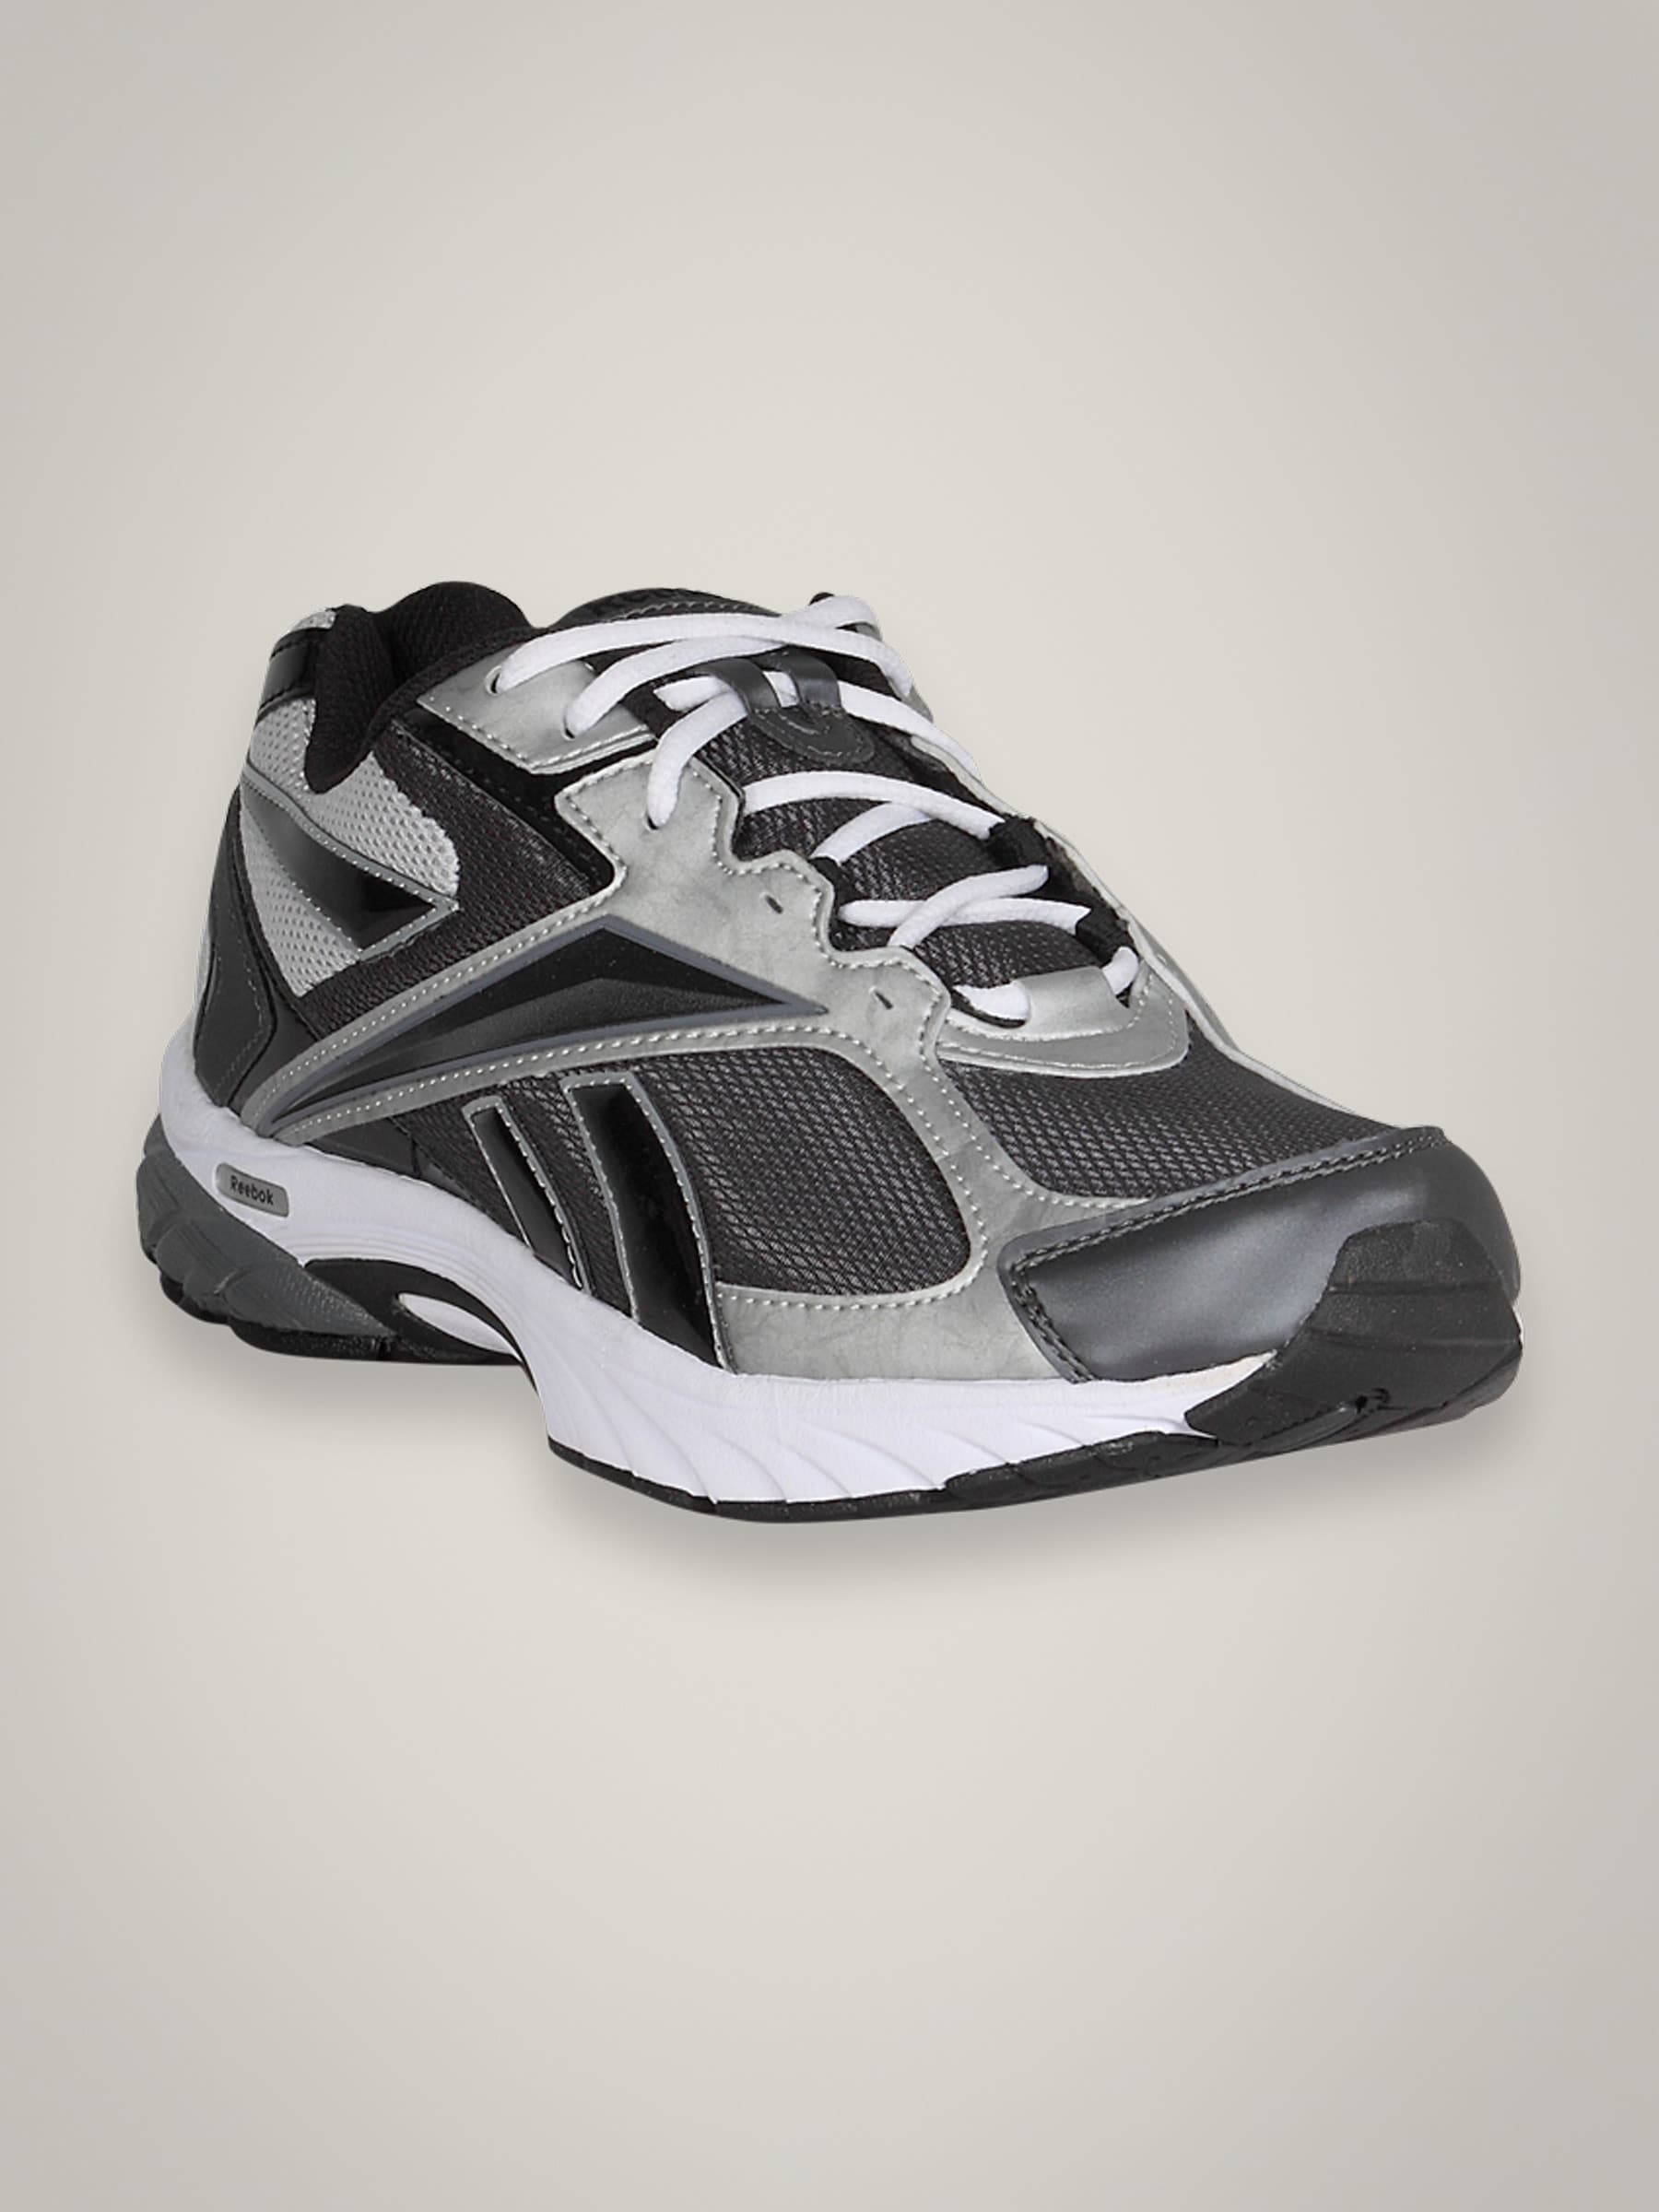 Reebok Men's Cruiseon Charcoal Grey Shoe